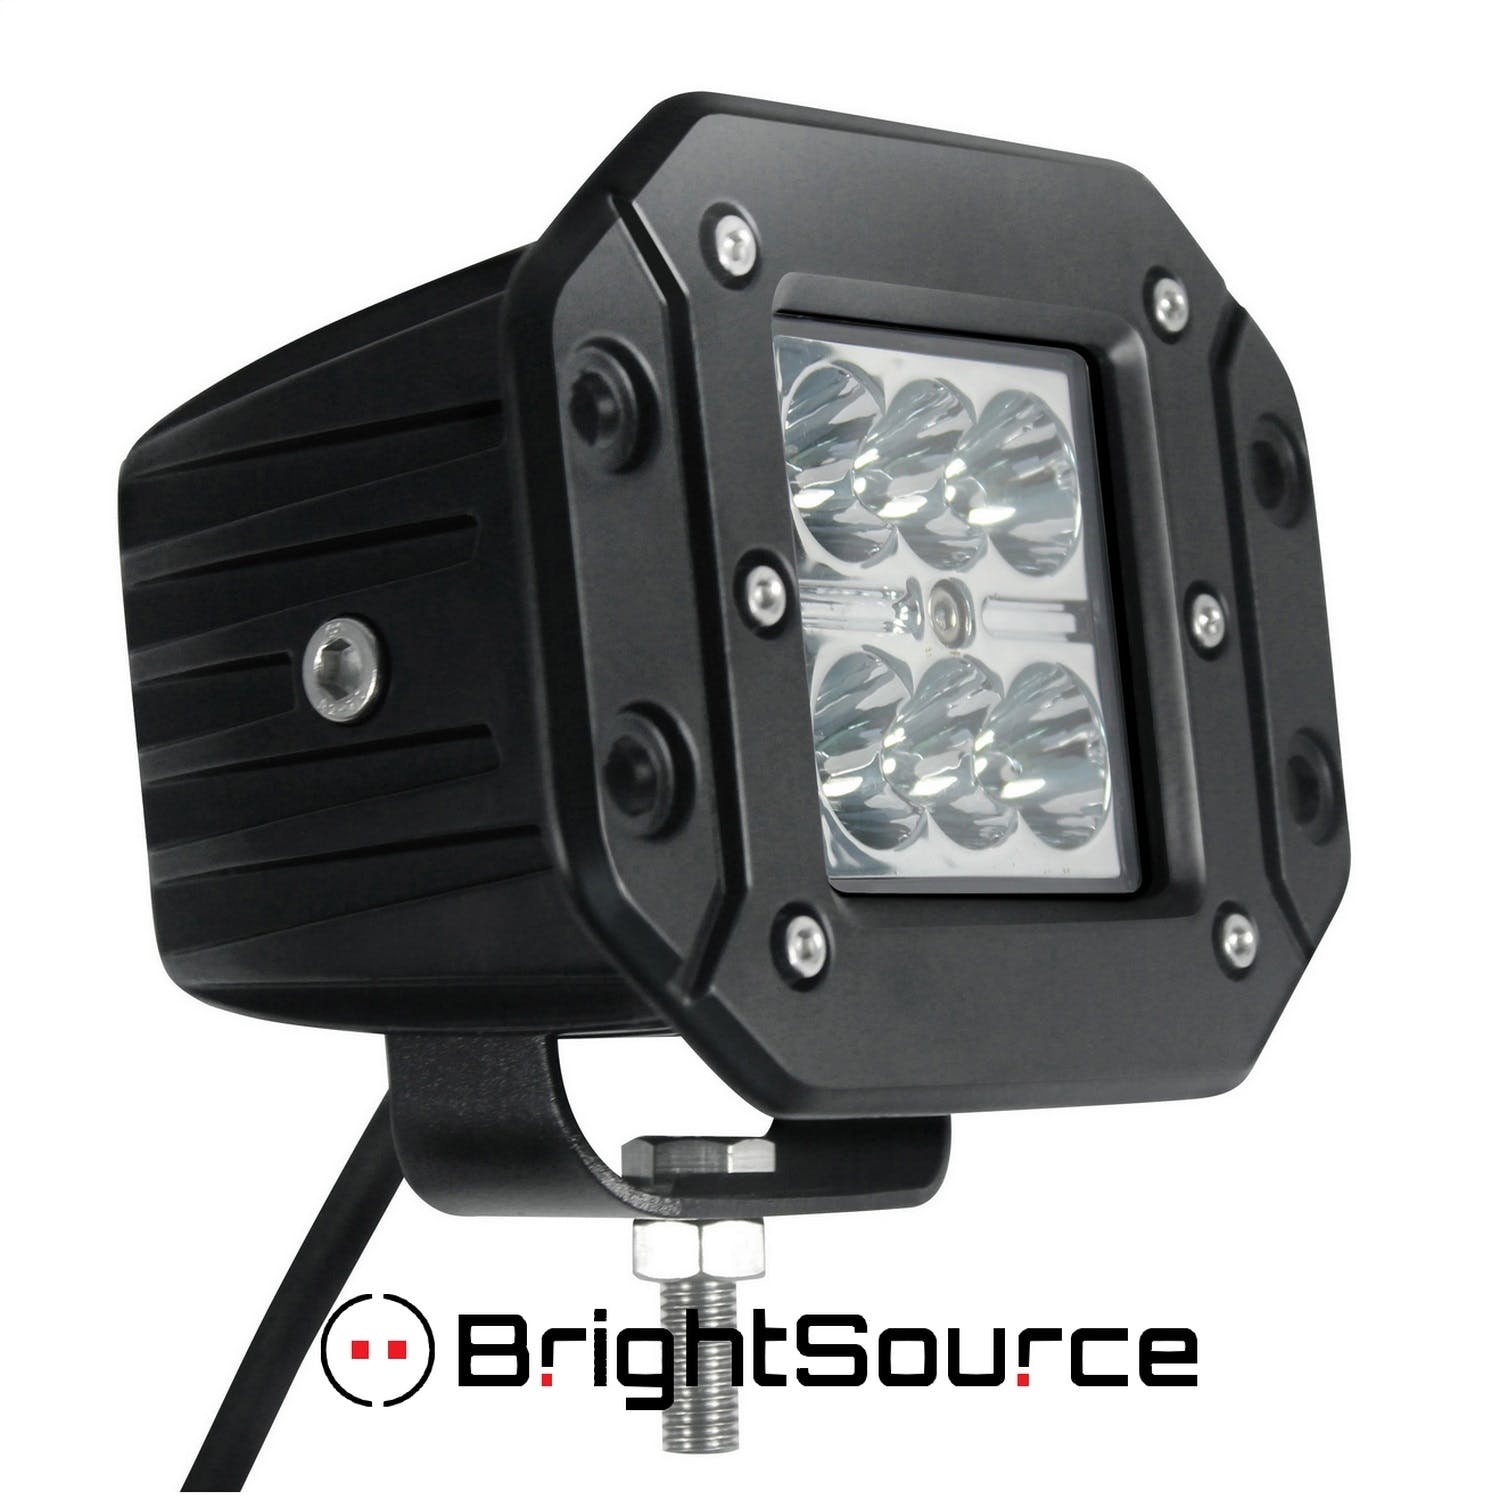 BrightSource 76002 Cube Light Kit